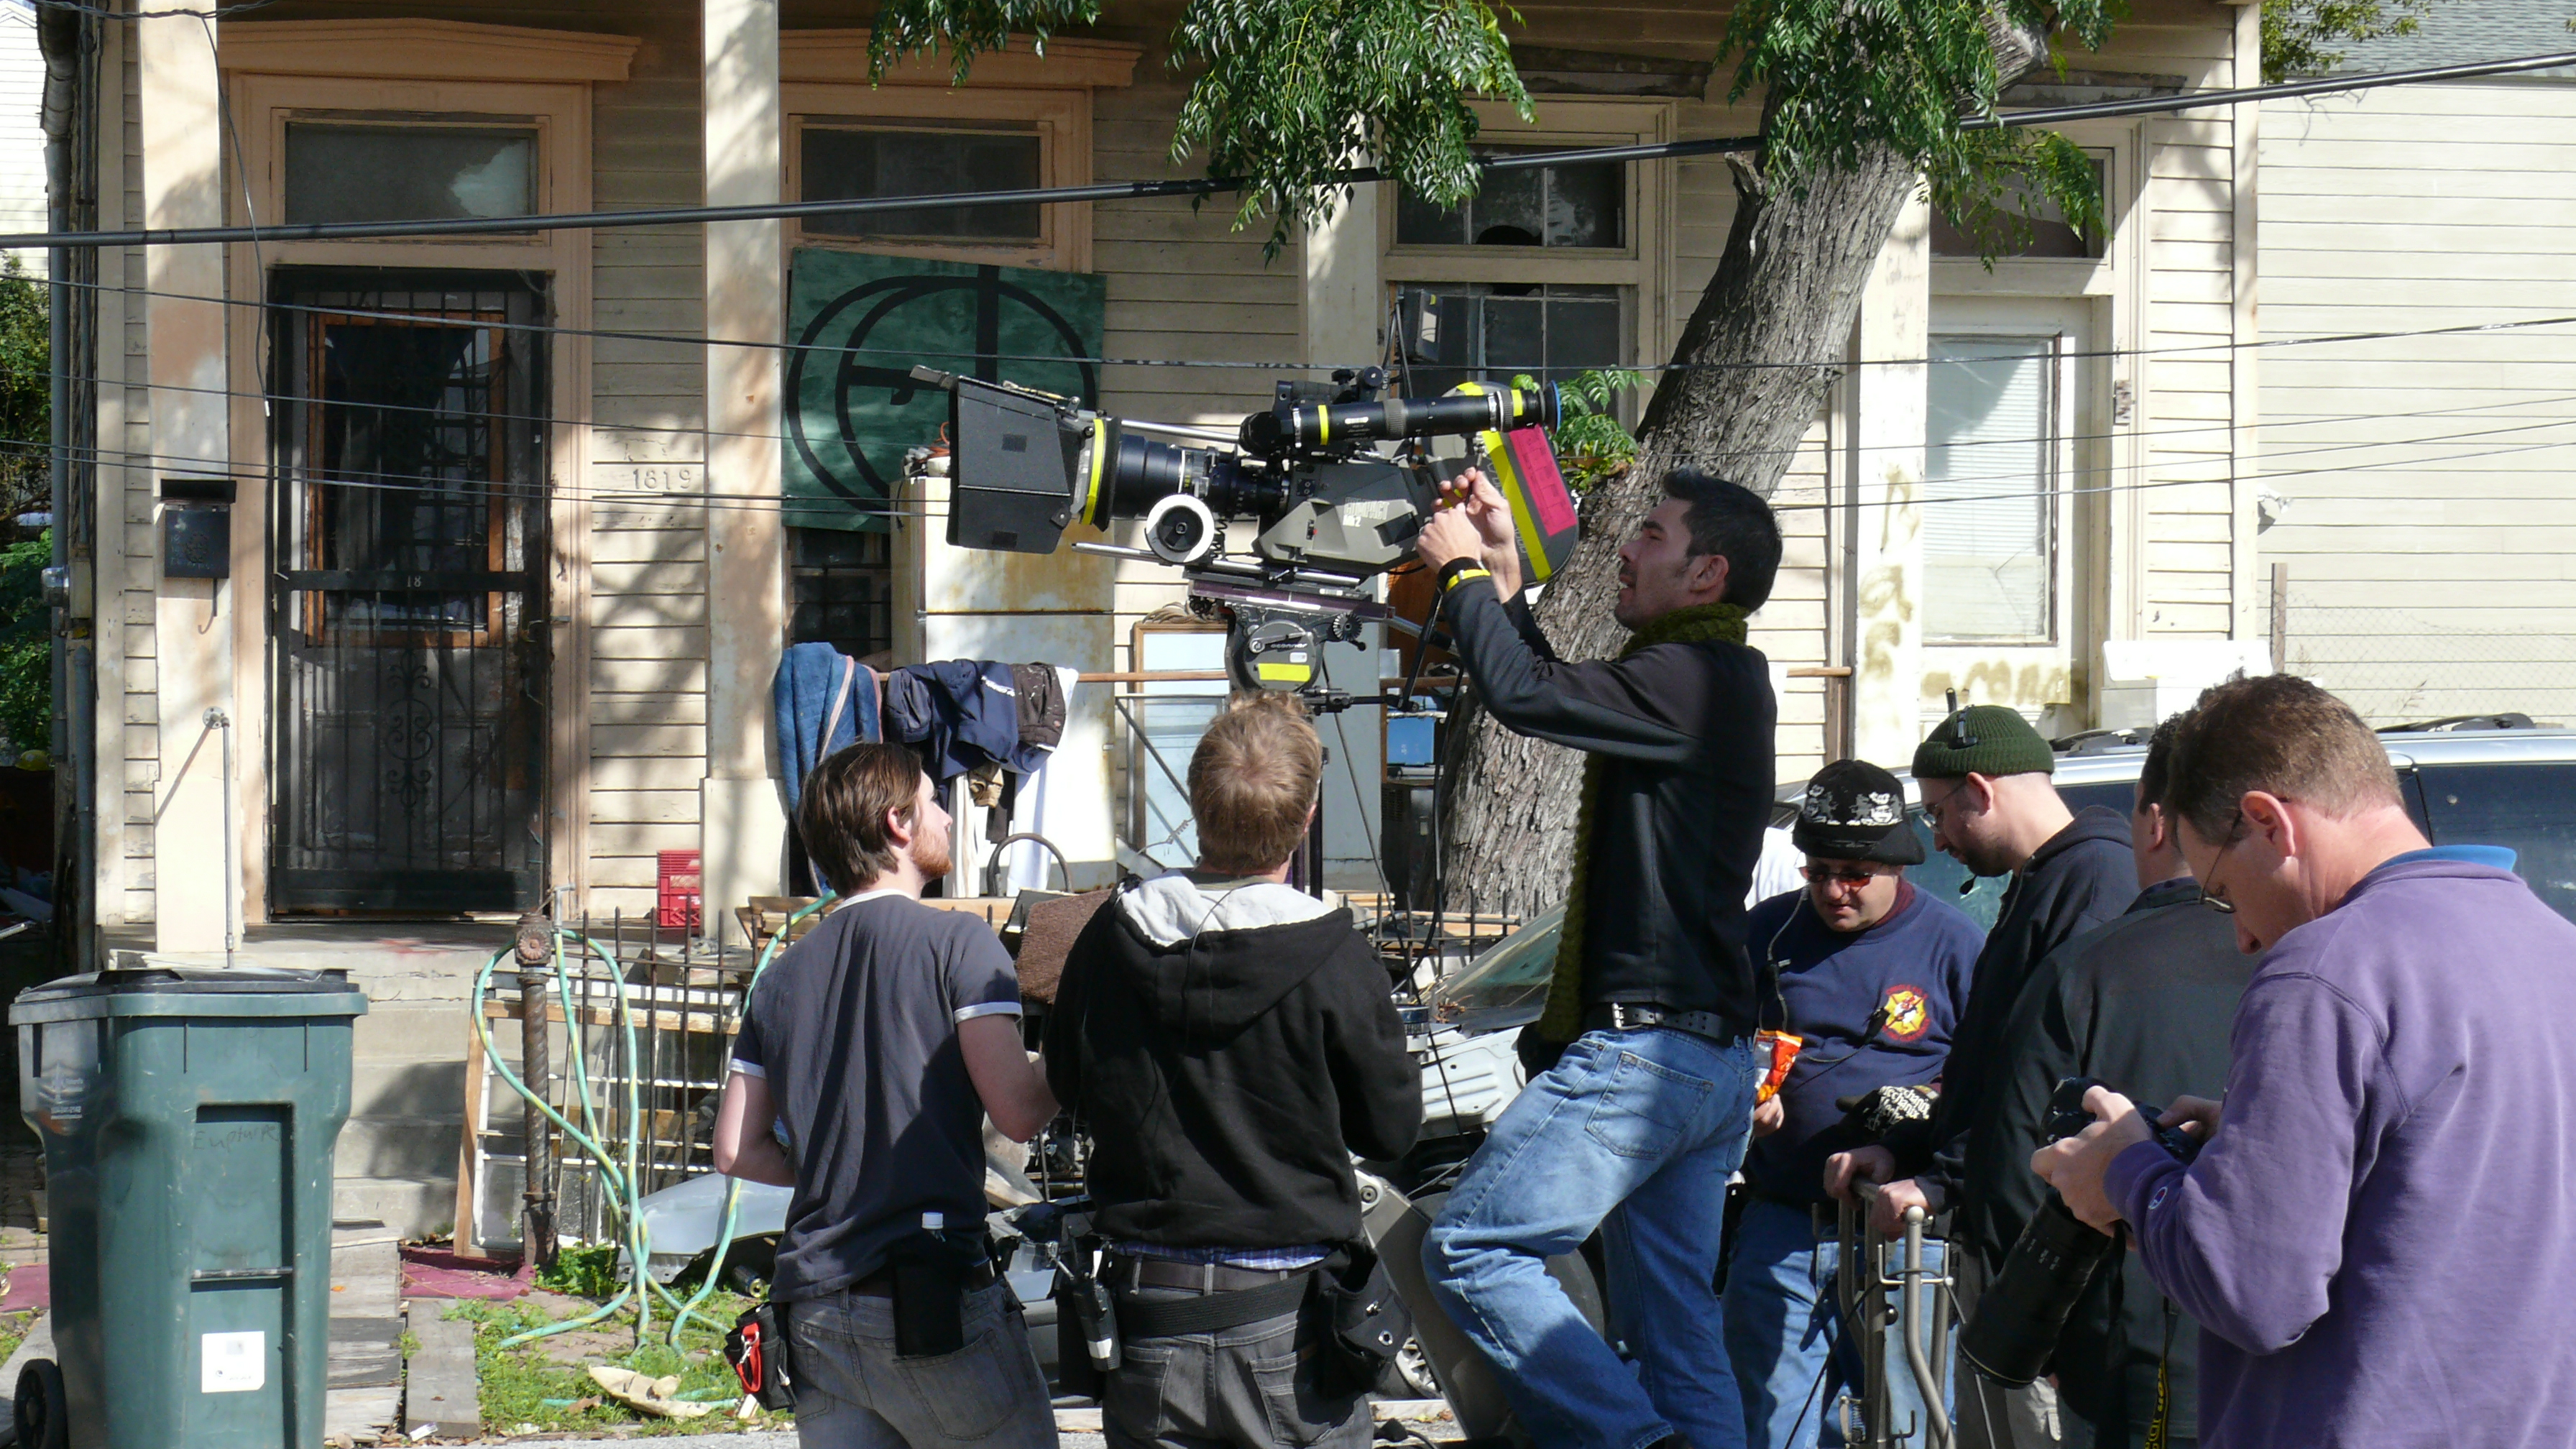 Director of Photography (Sinners&Saints); Mark Rutledge prepares for next scene.